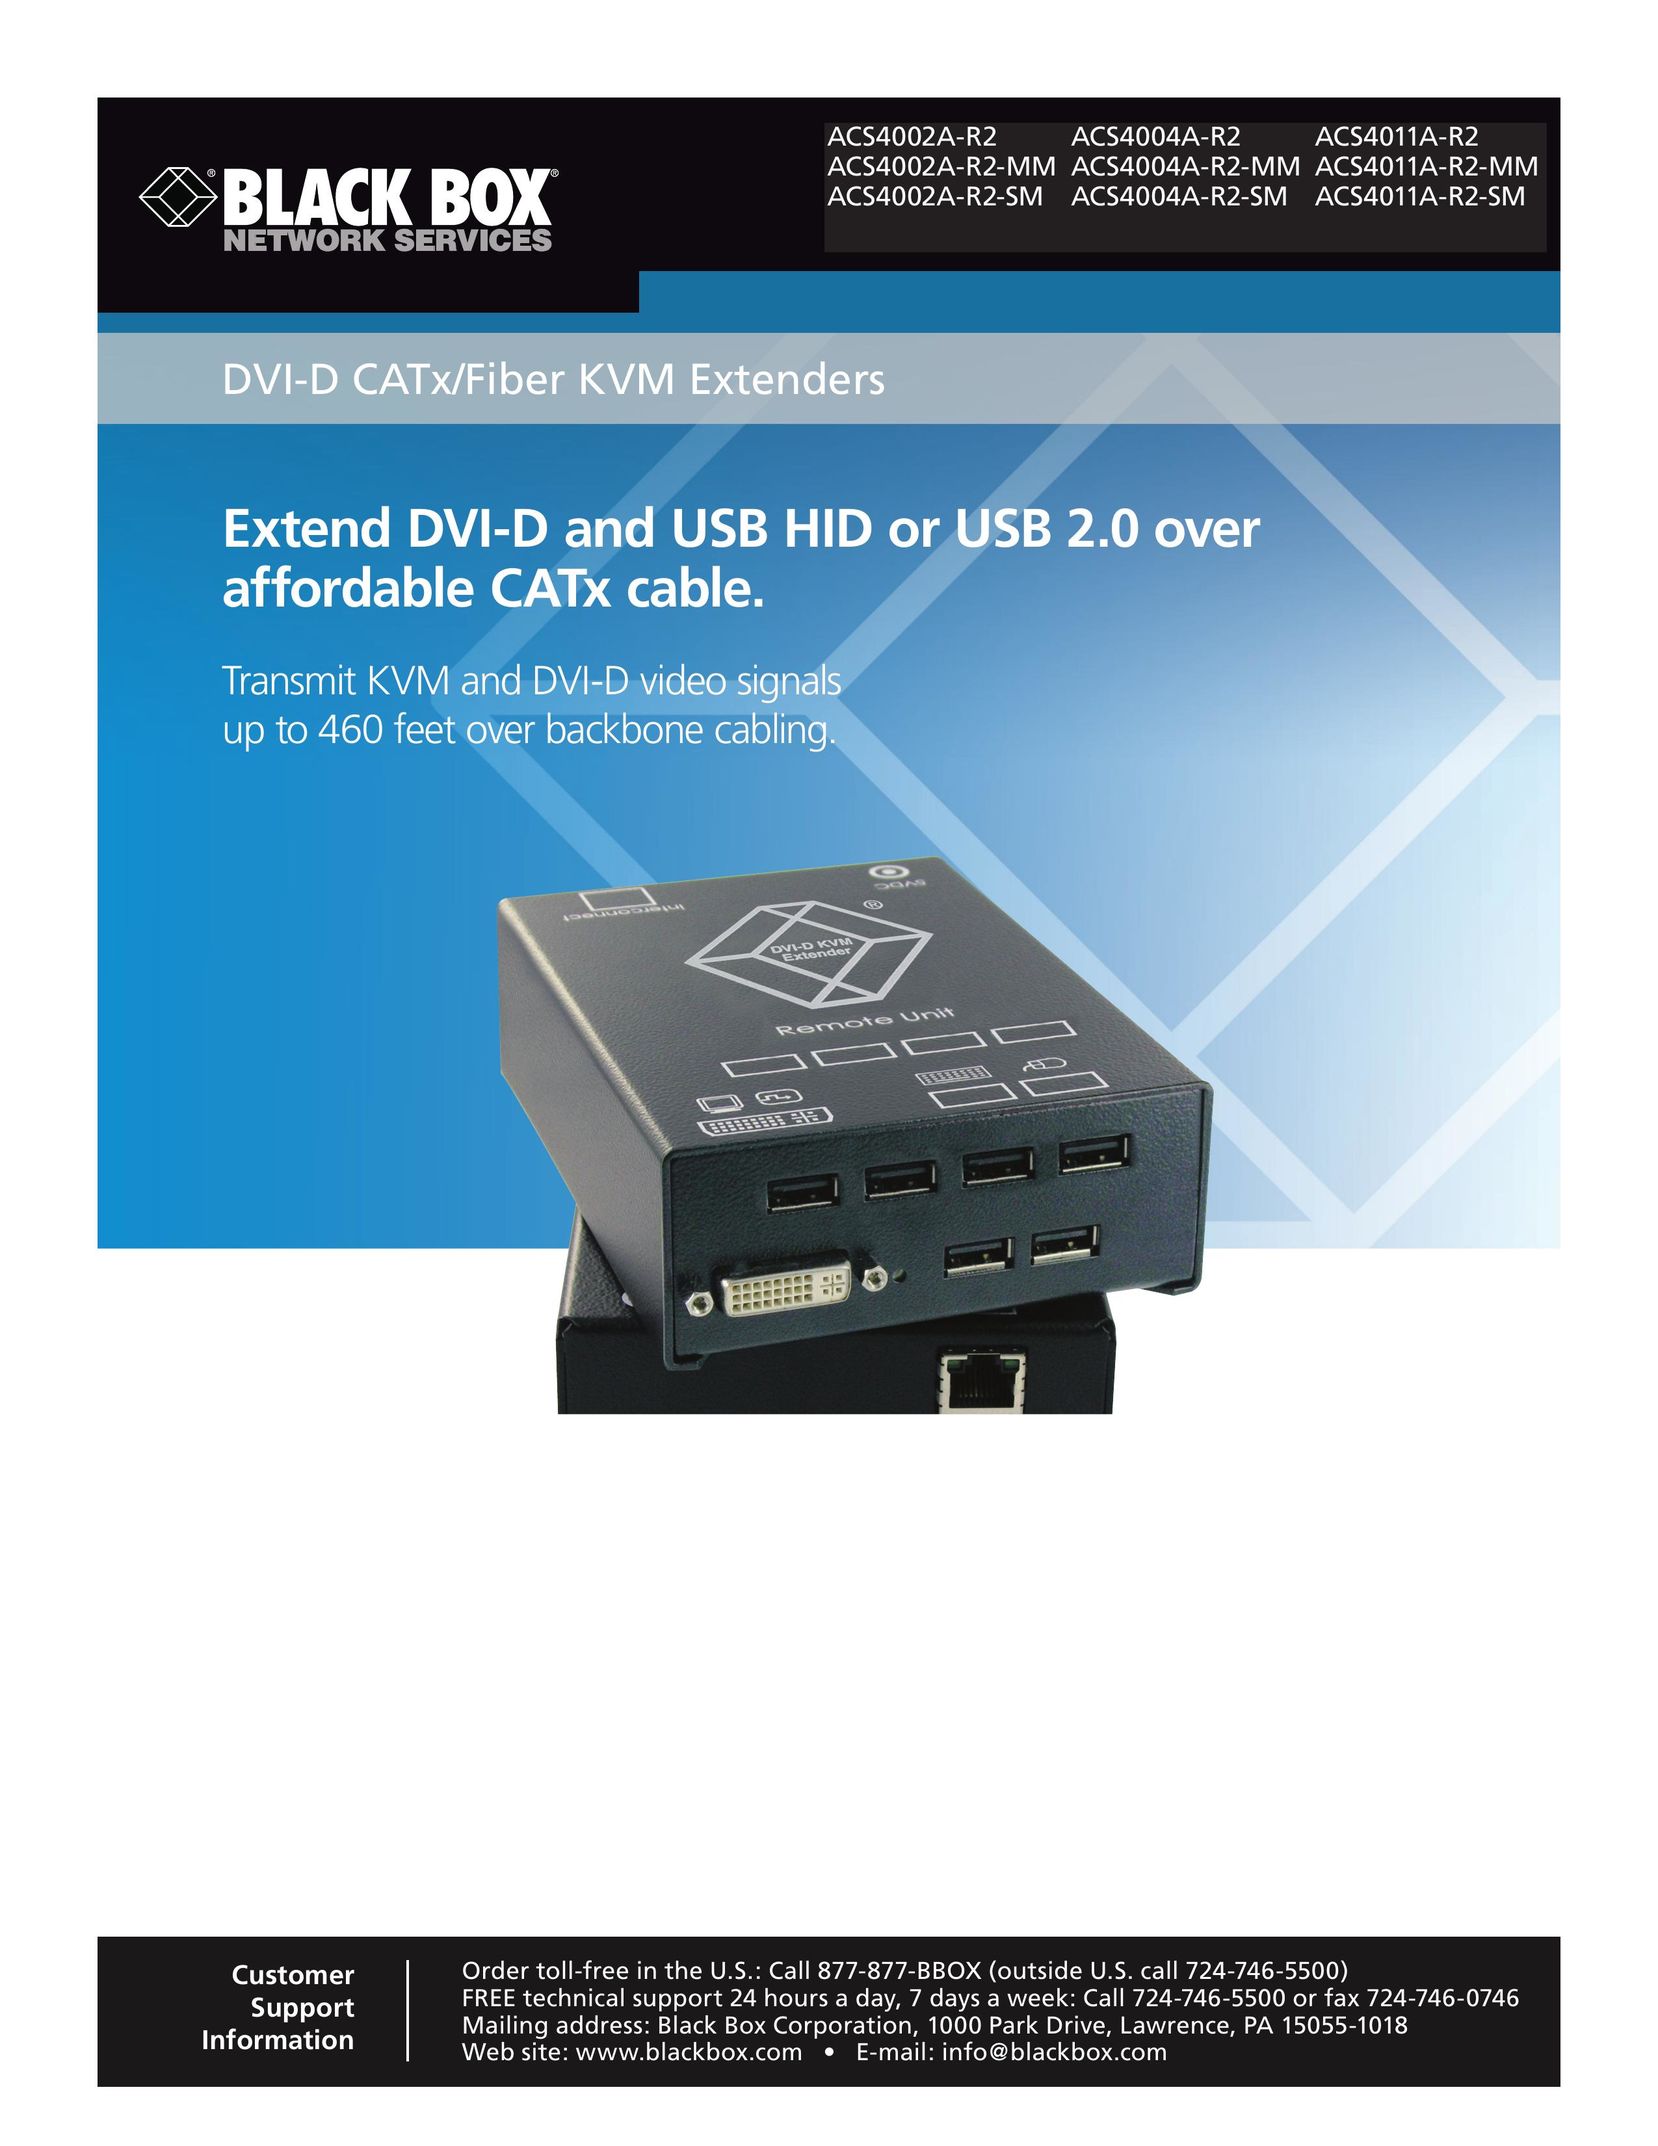 Black Box ACS4002A-R2-MM Network Hardware User Manual